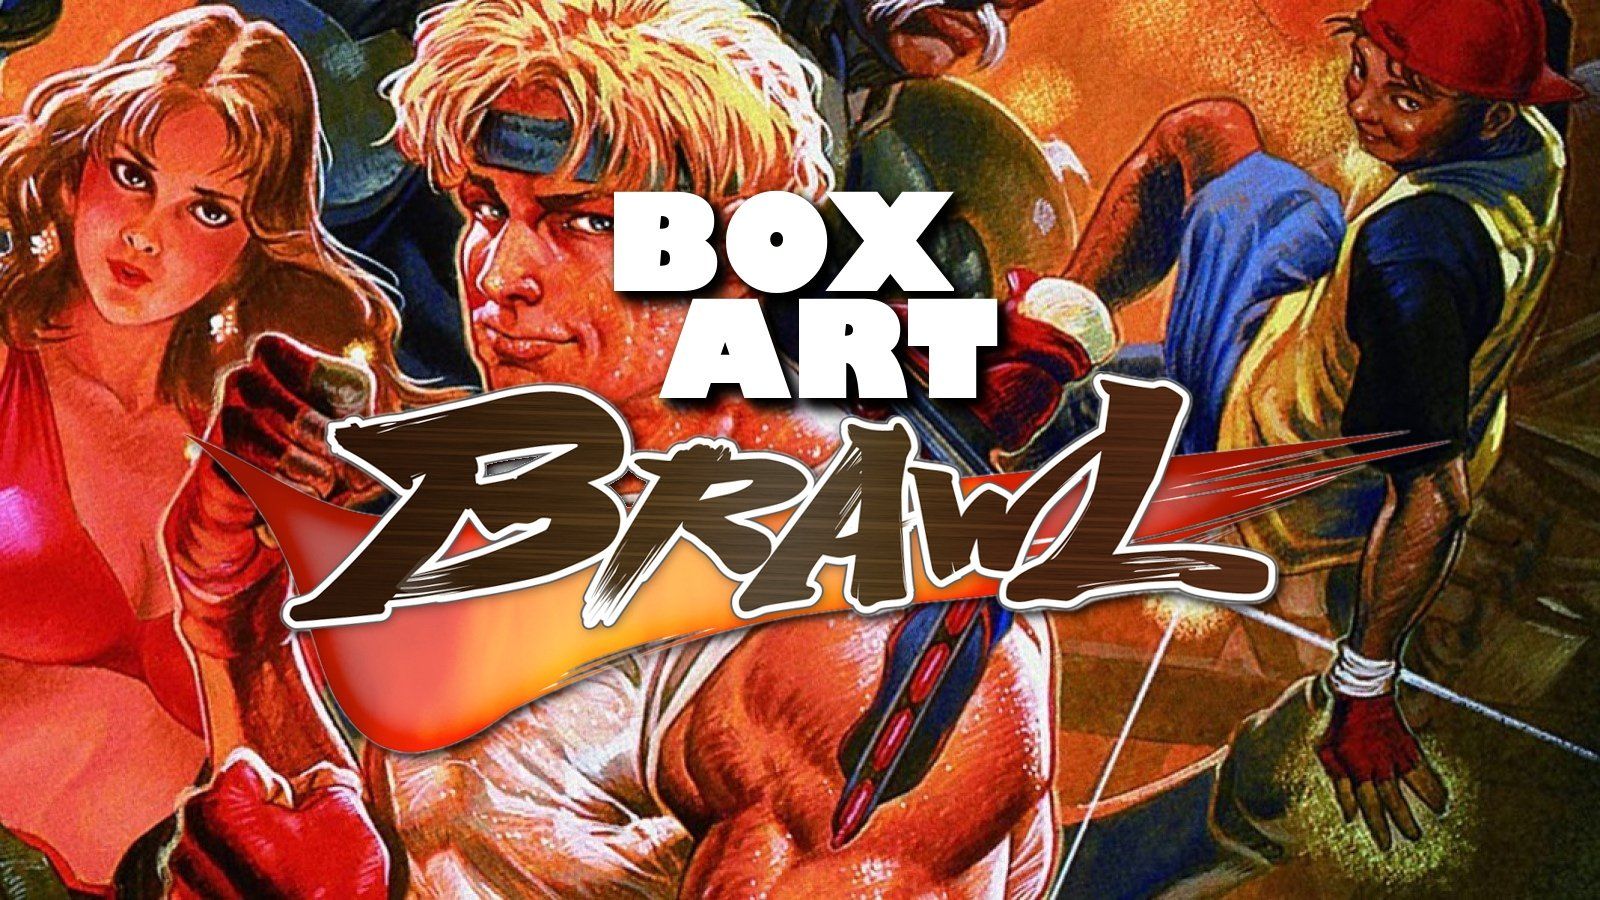 Poll: Box Art Brawl Of Rage 3